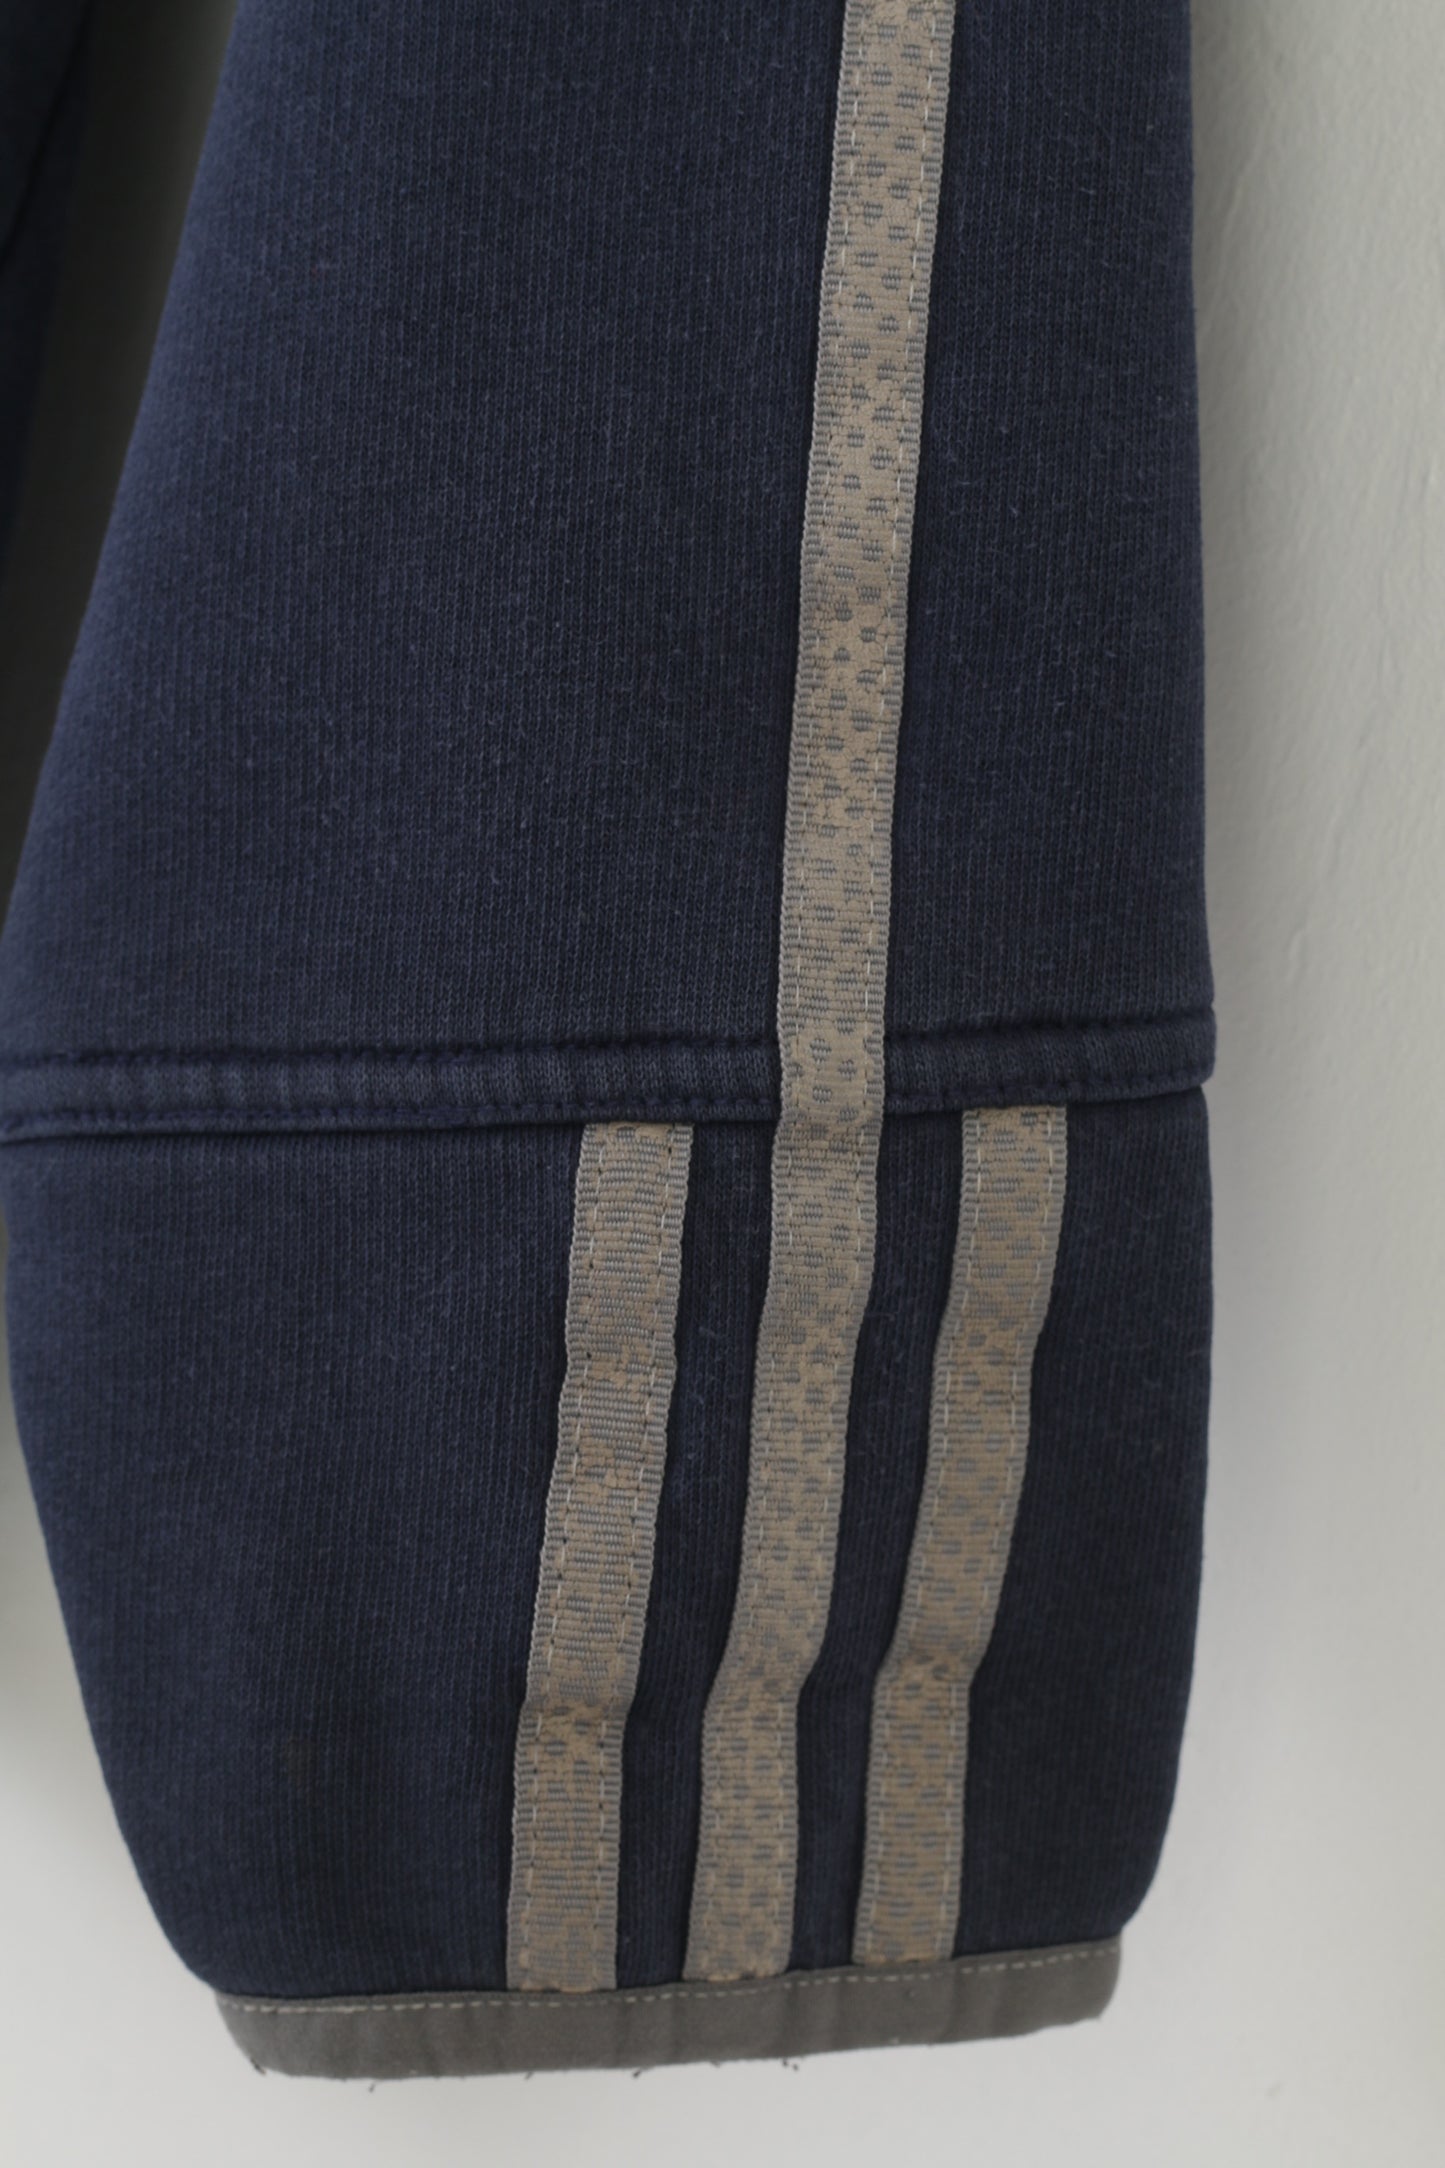 Adidas Boys 12 Age Sweatshirt Navy Vintage Sport Training Cotton Top